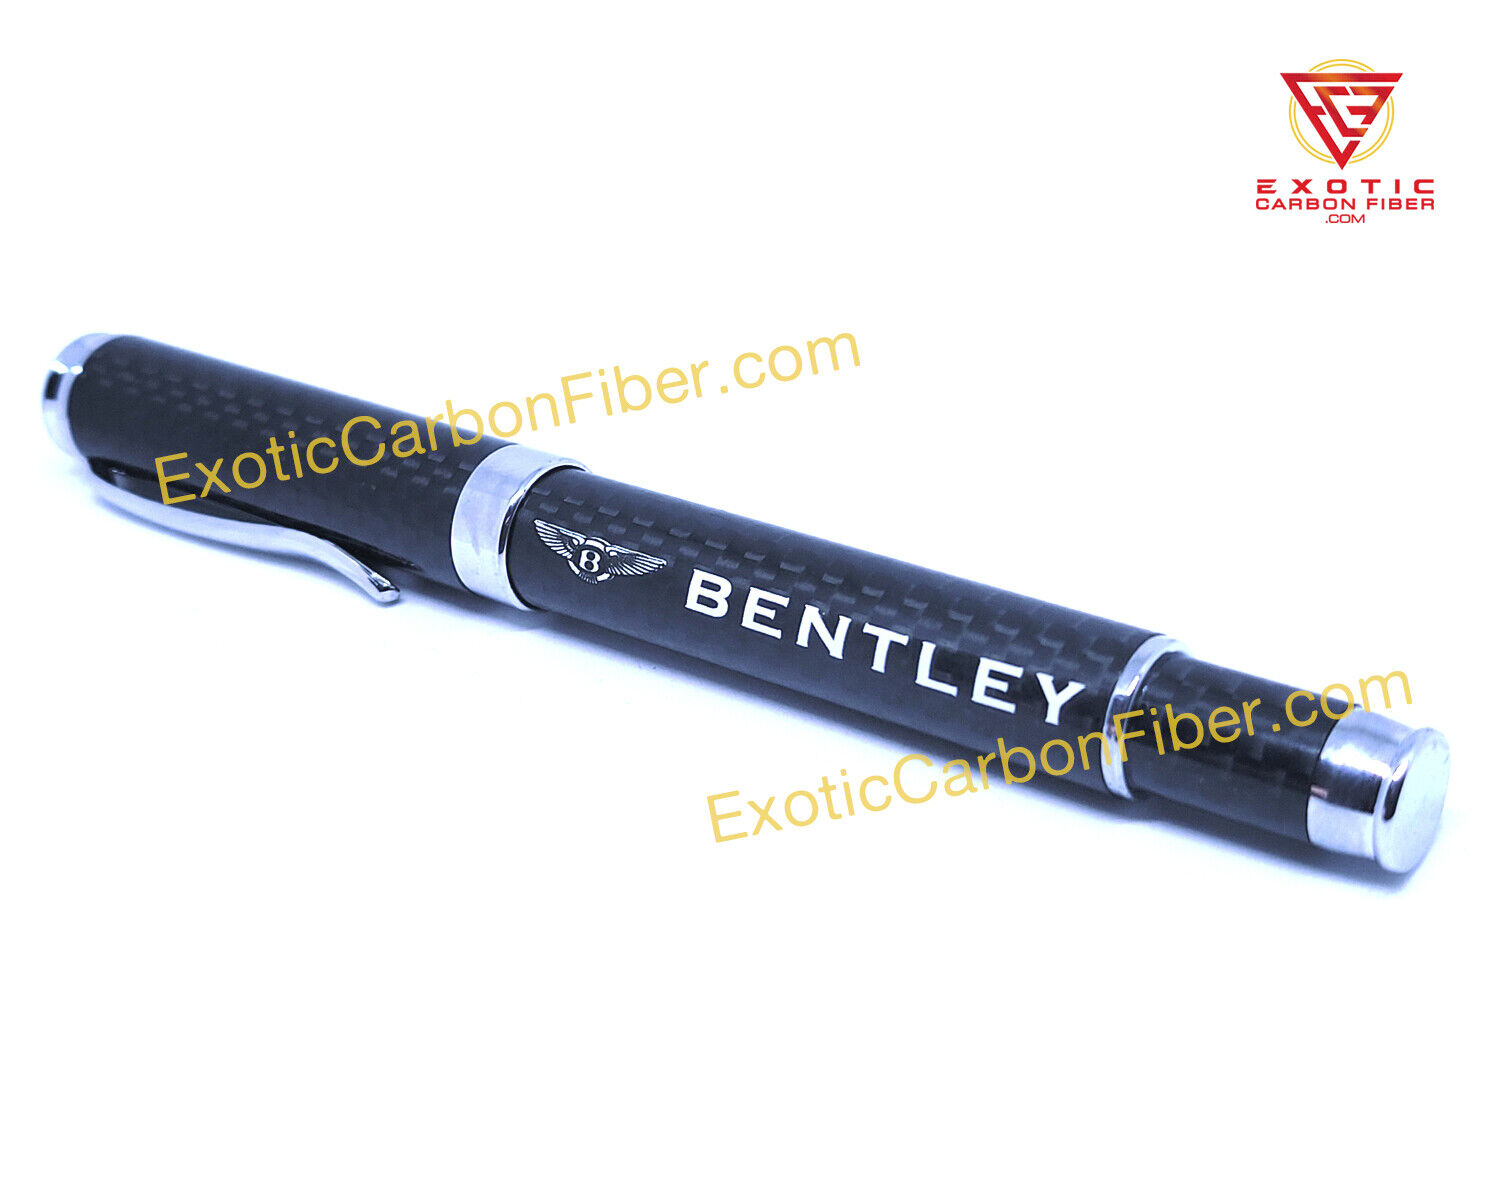 Bentley White Text and Logo Carbon Fiber Ballpoint Pen - Great Gift